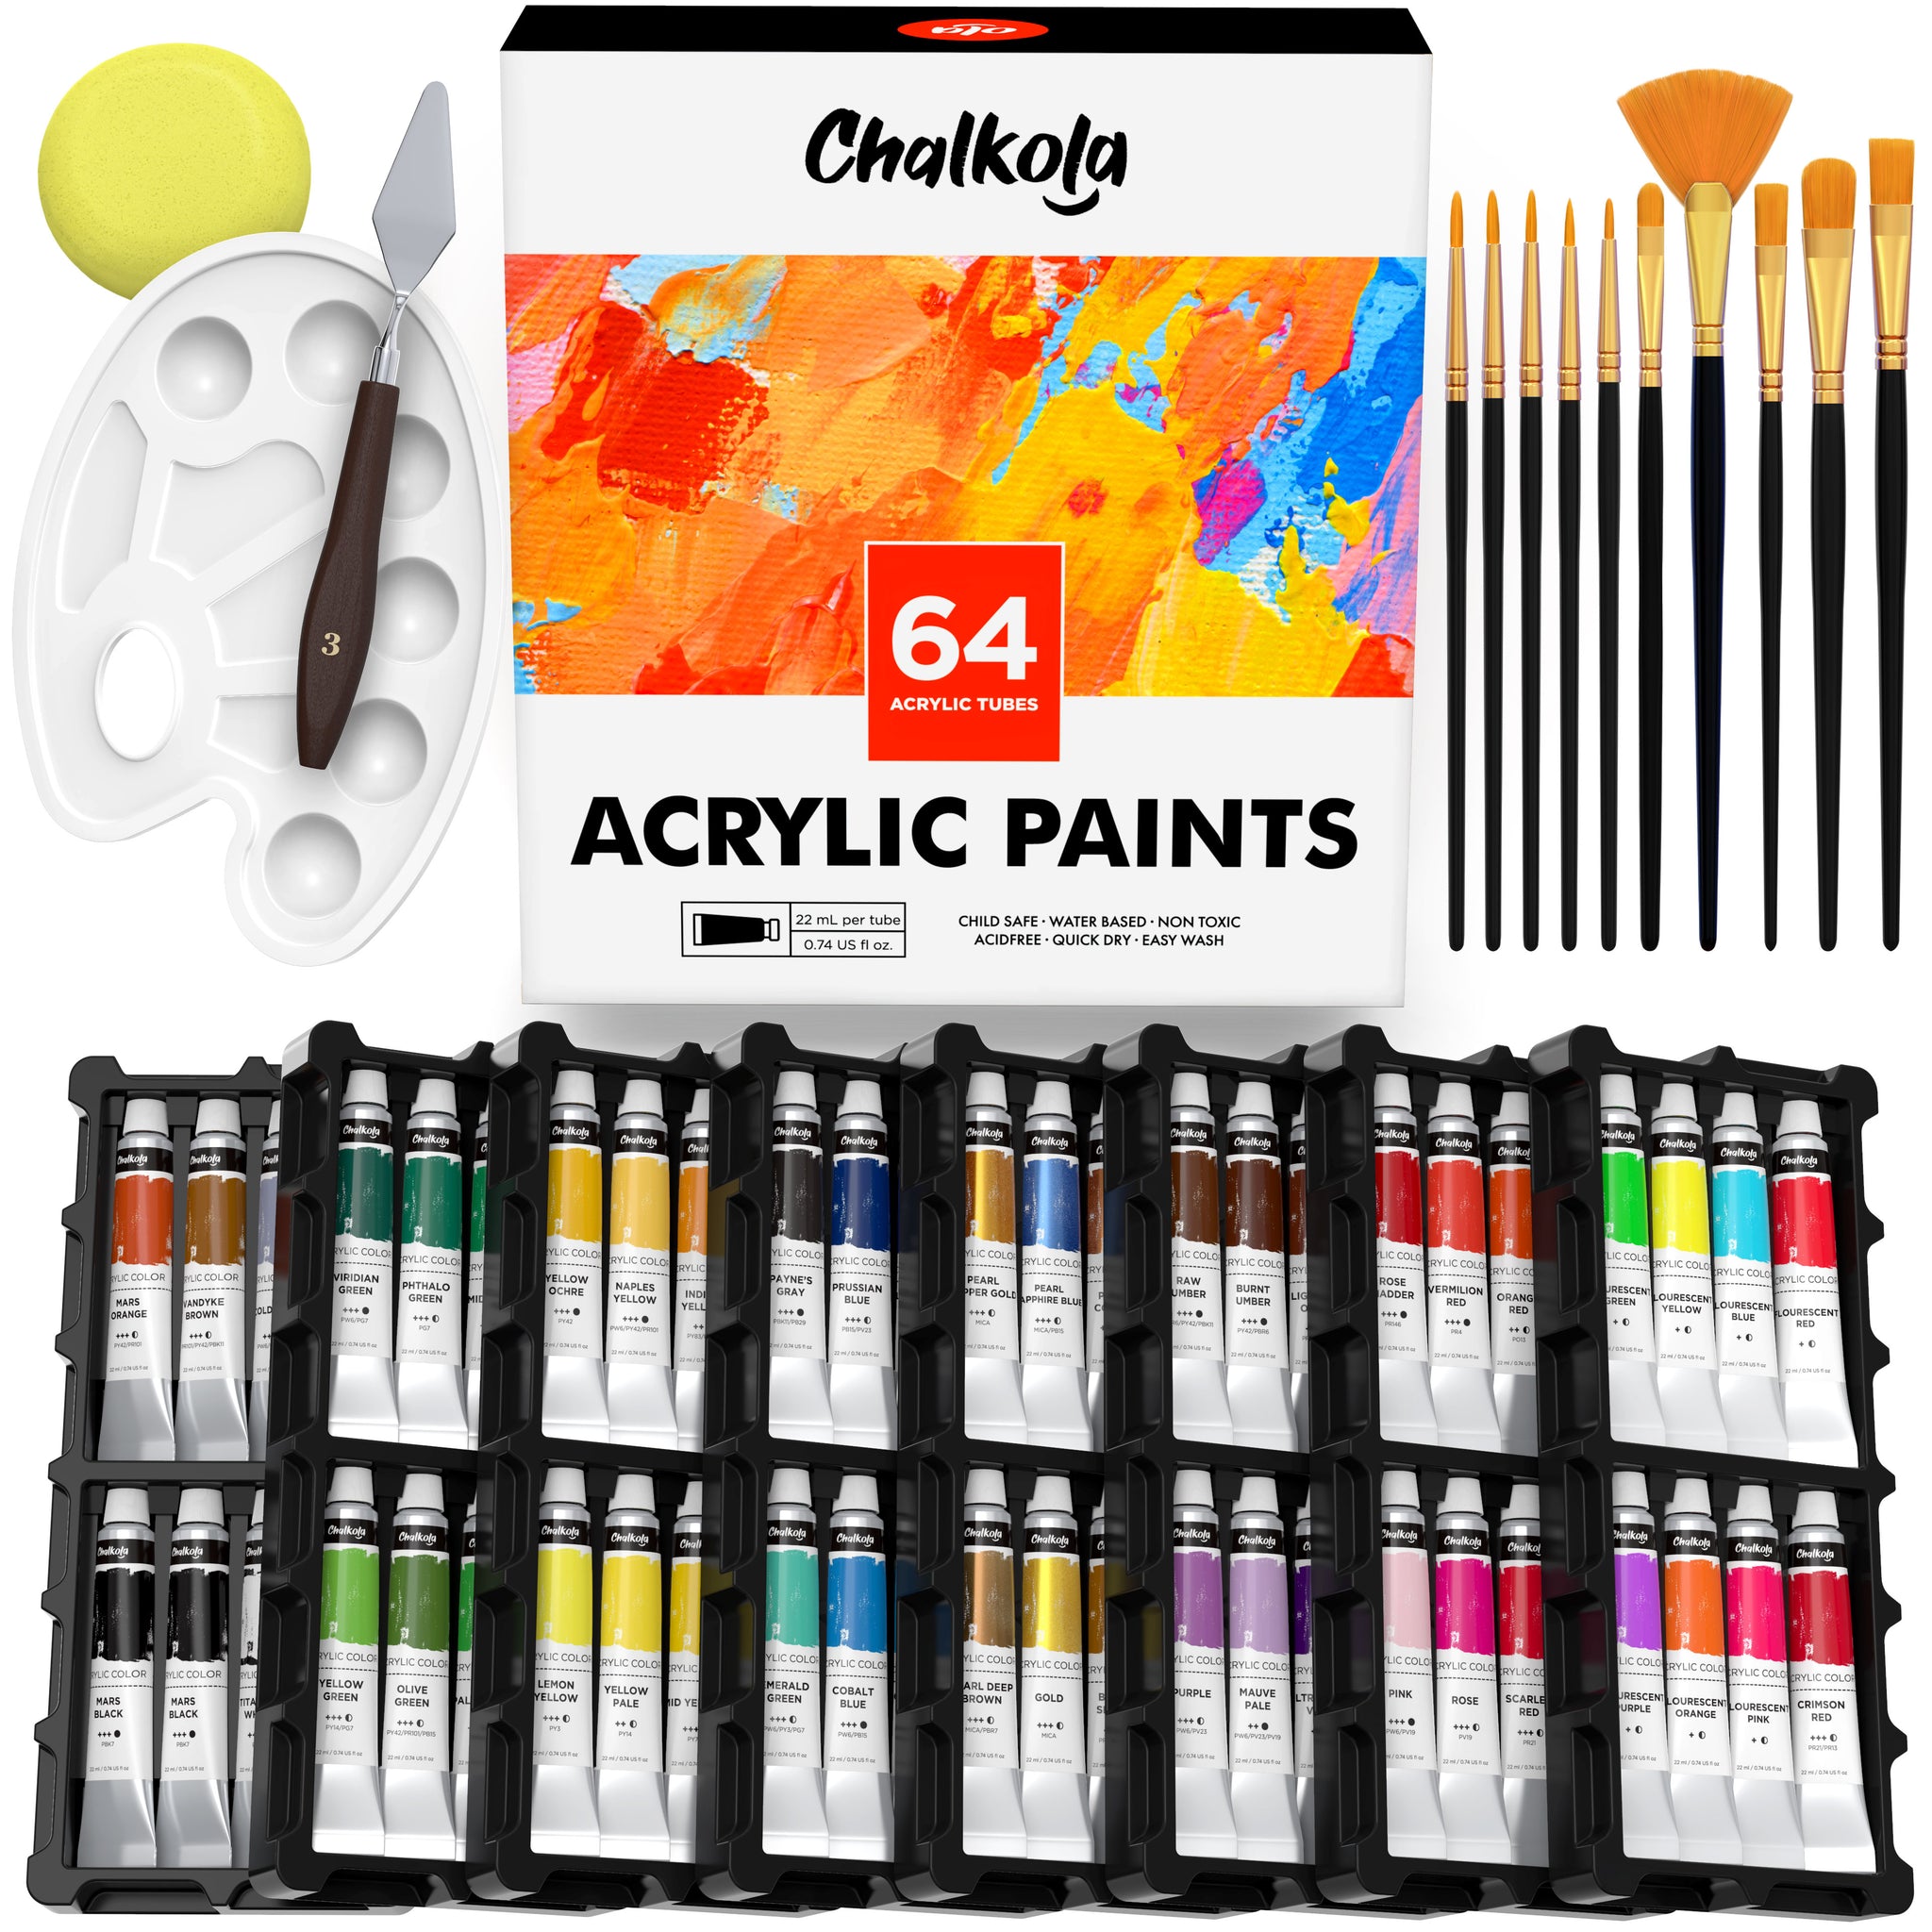 Basic Acrylic Painting Supplies - Chalkola Art Supply